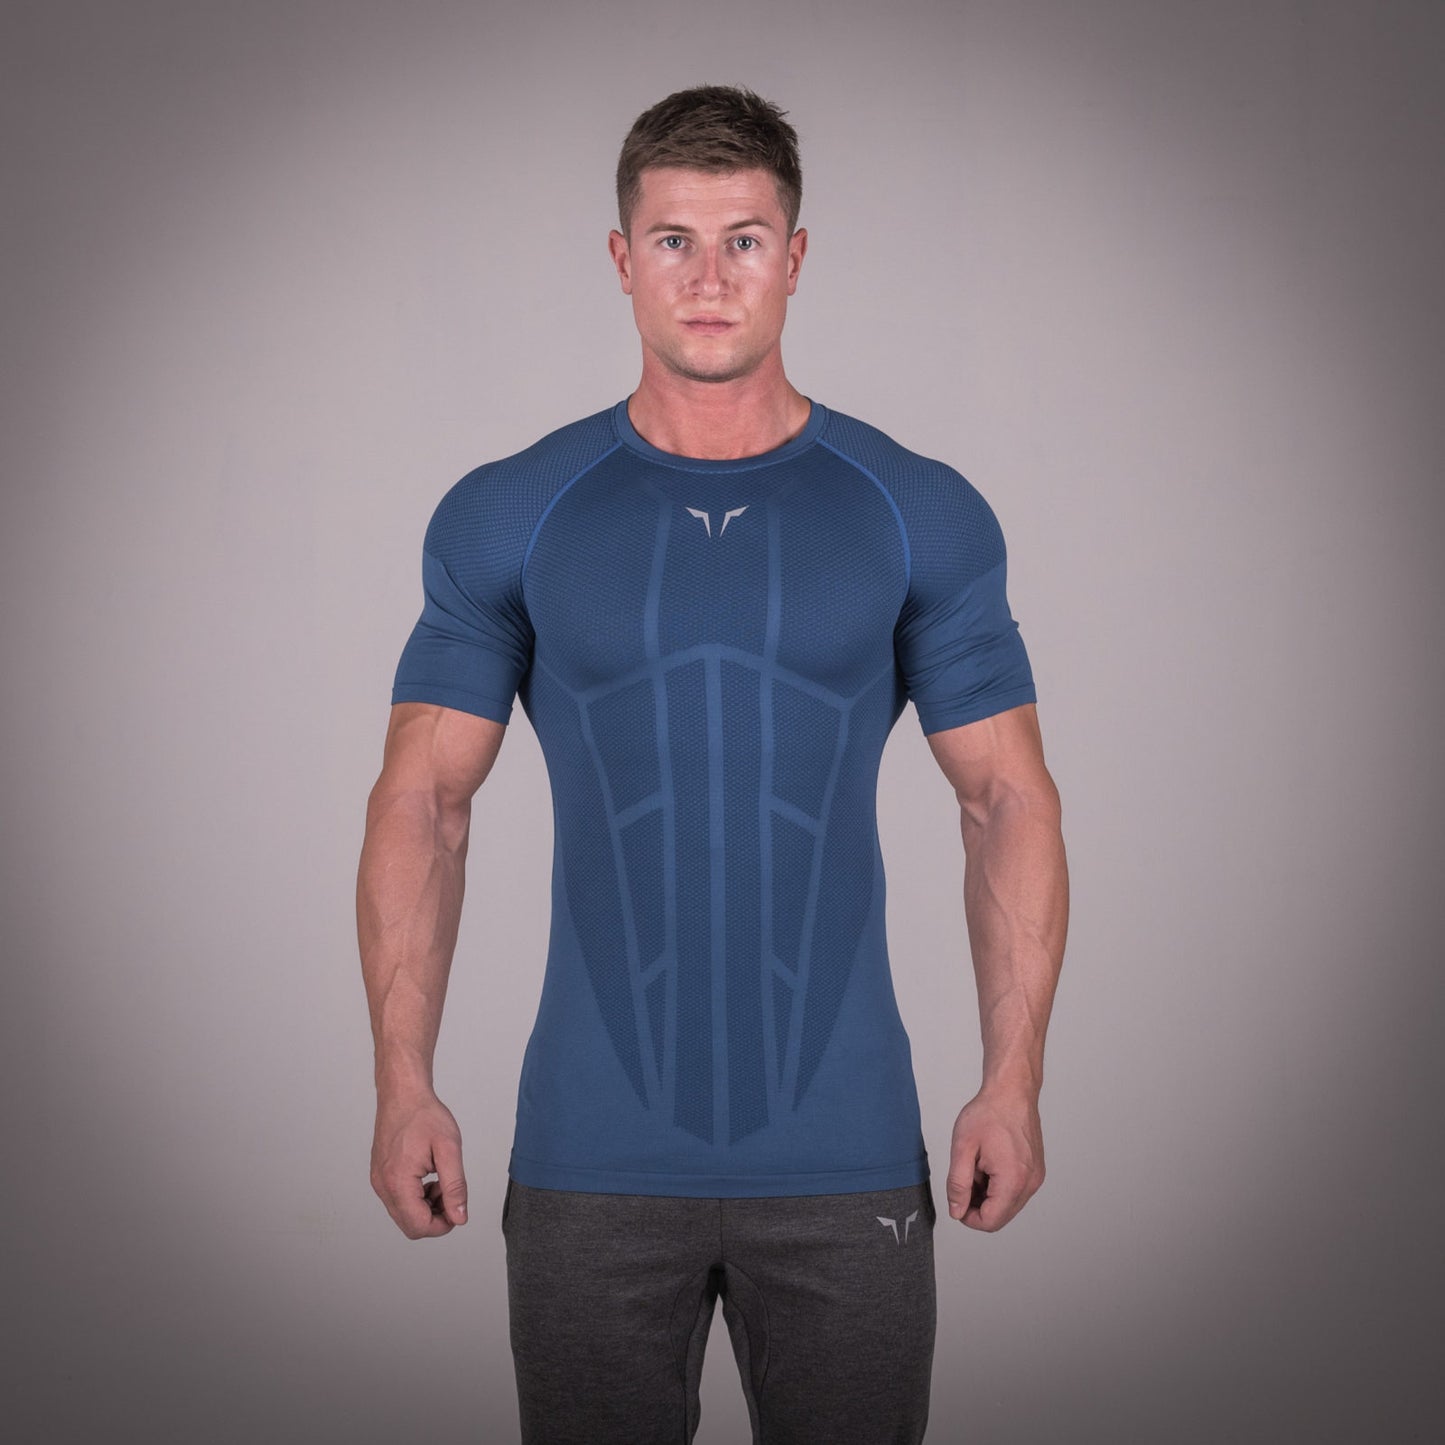 squatwolf-gym-wear-seamless-spyder-tee-blue-workout-t-shirts-for-men